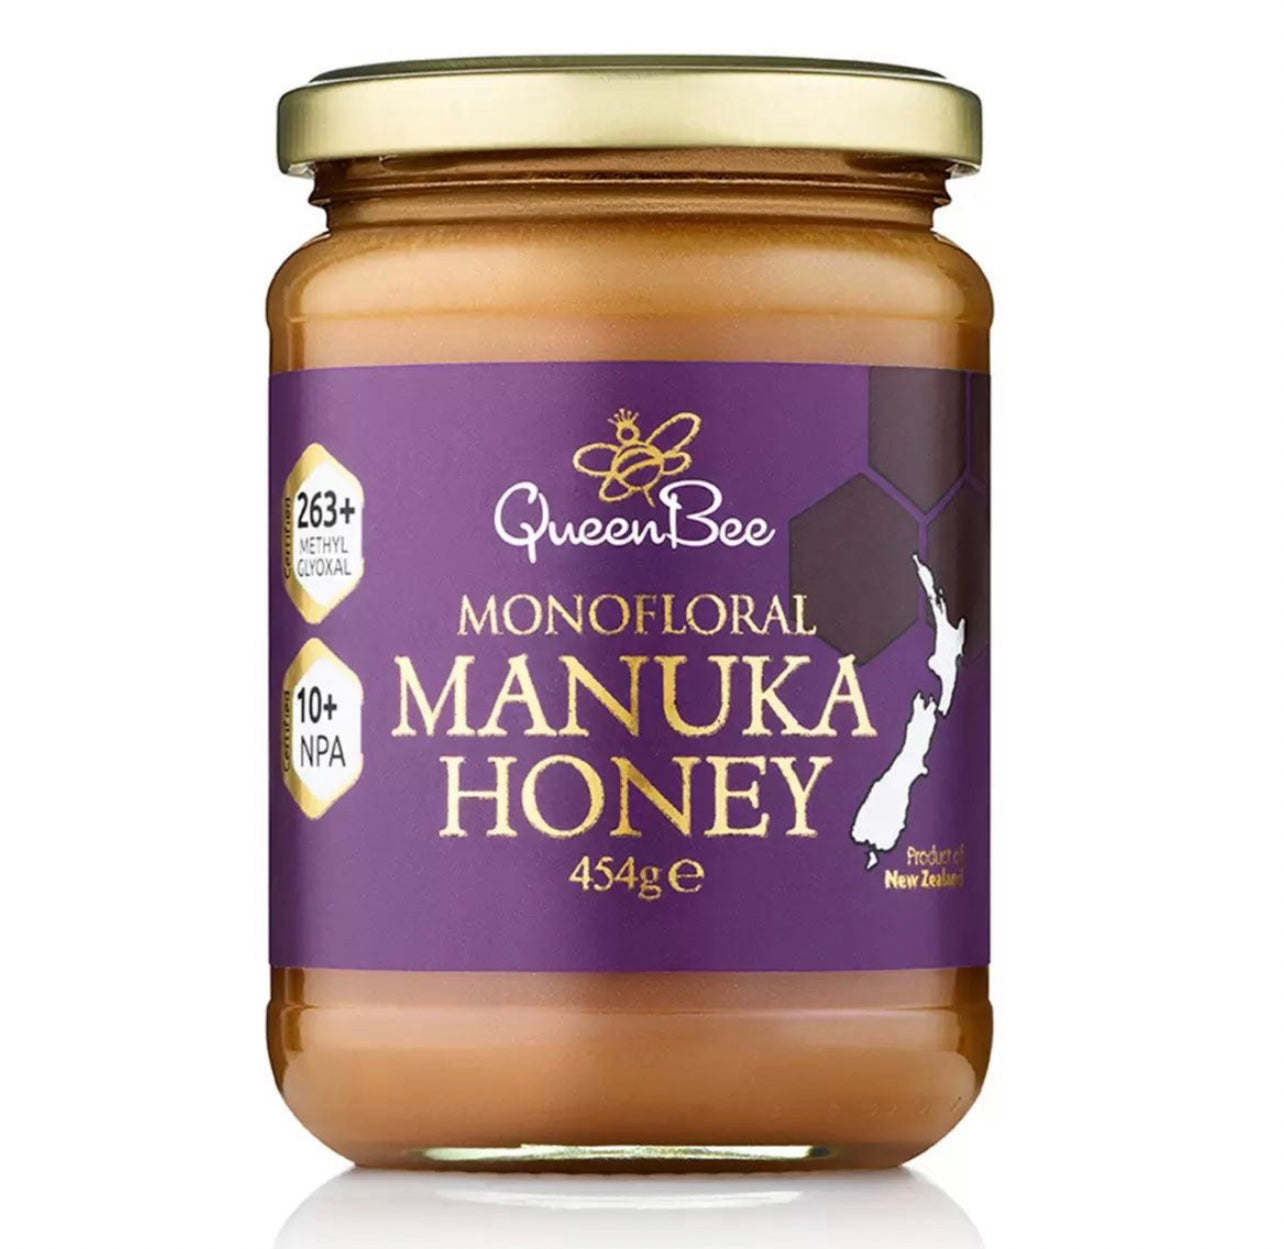 Manuka Honey MGO 263+, Queen Bee (454g)